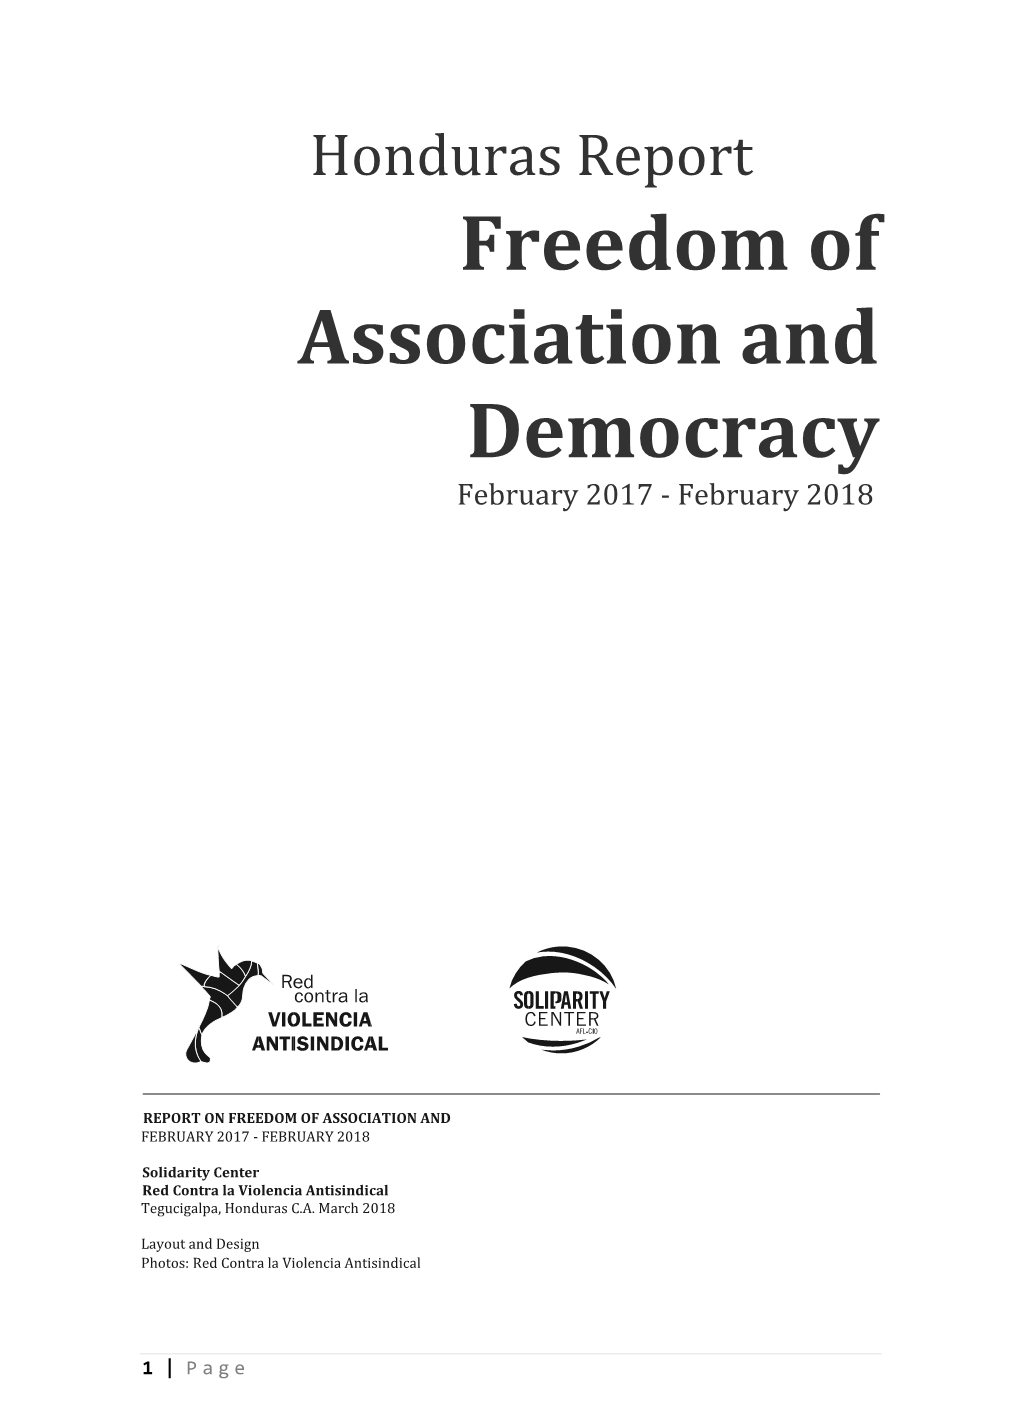 Freedom of Association and Democracy February 2017 - February 2018